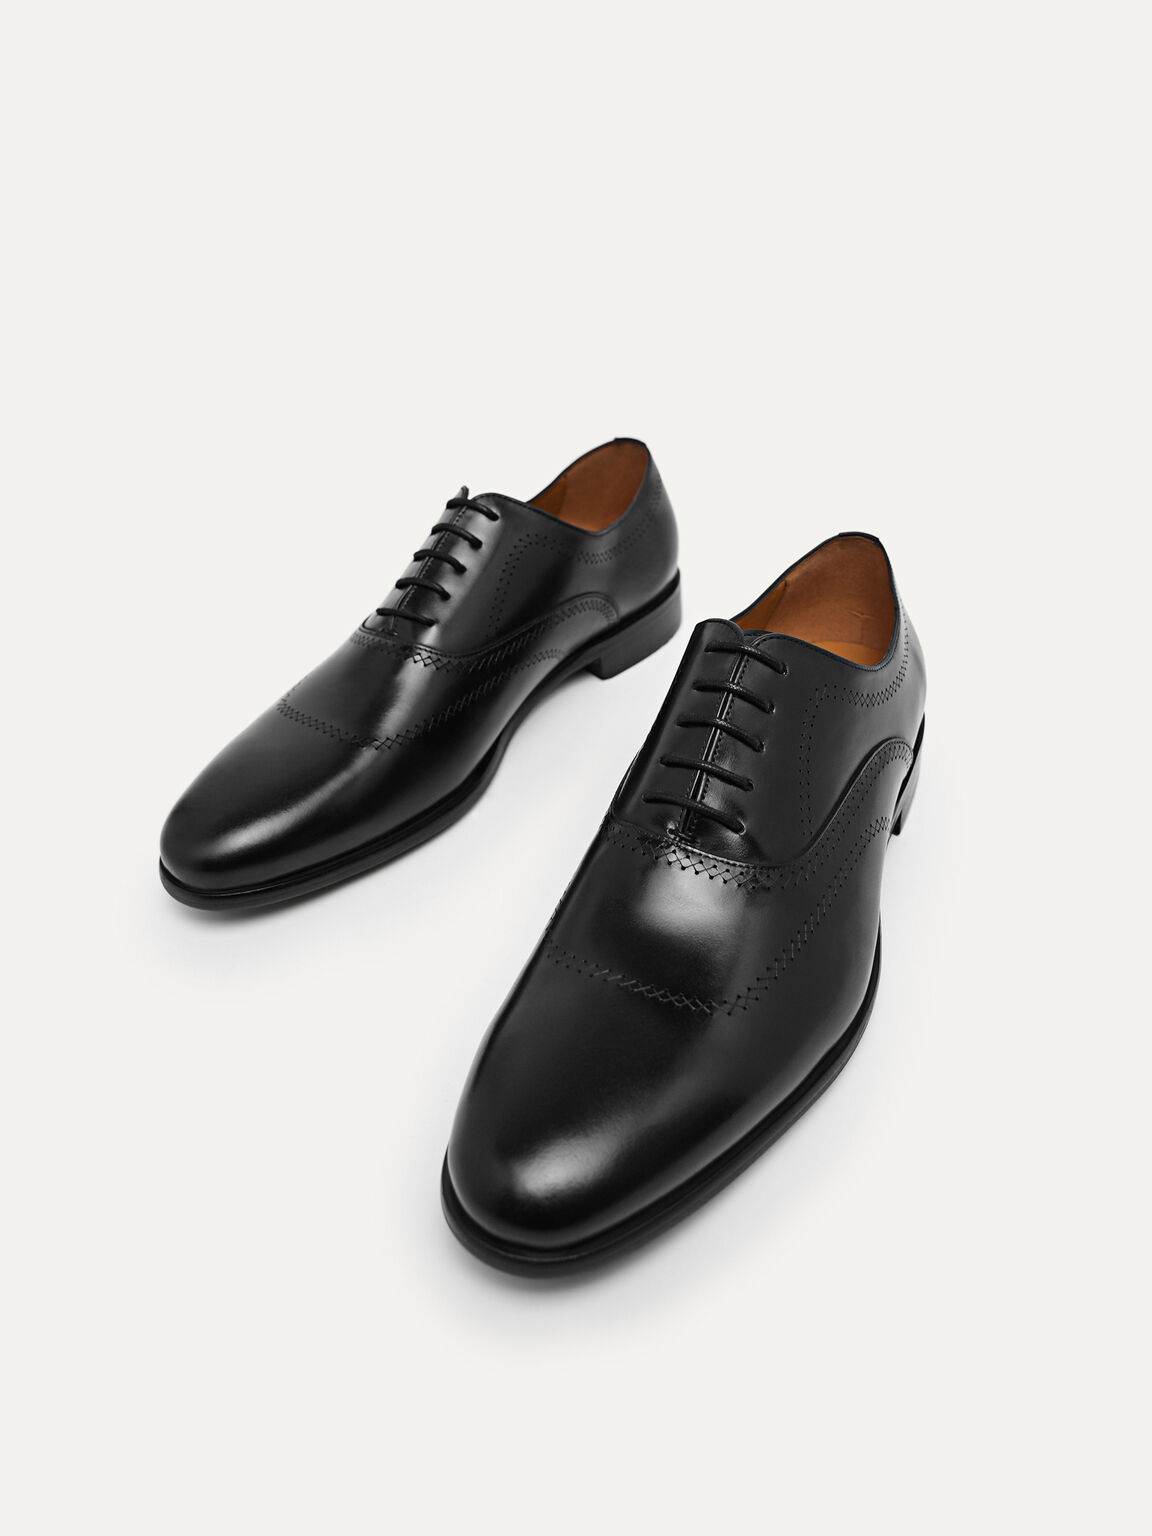 Leather Oxford Shoes, Black, hi-res